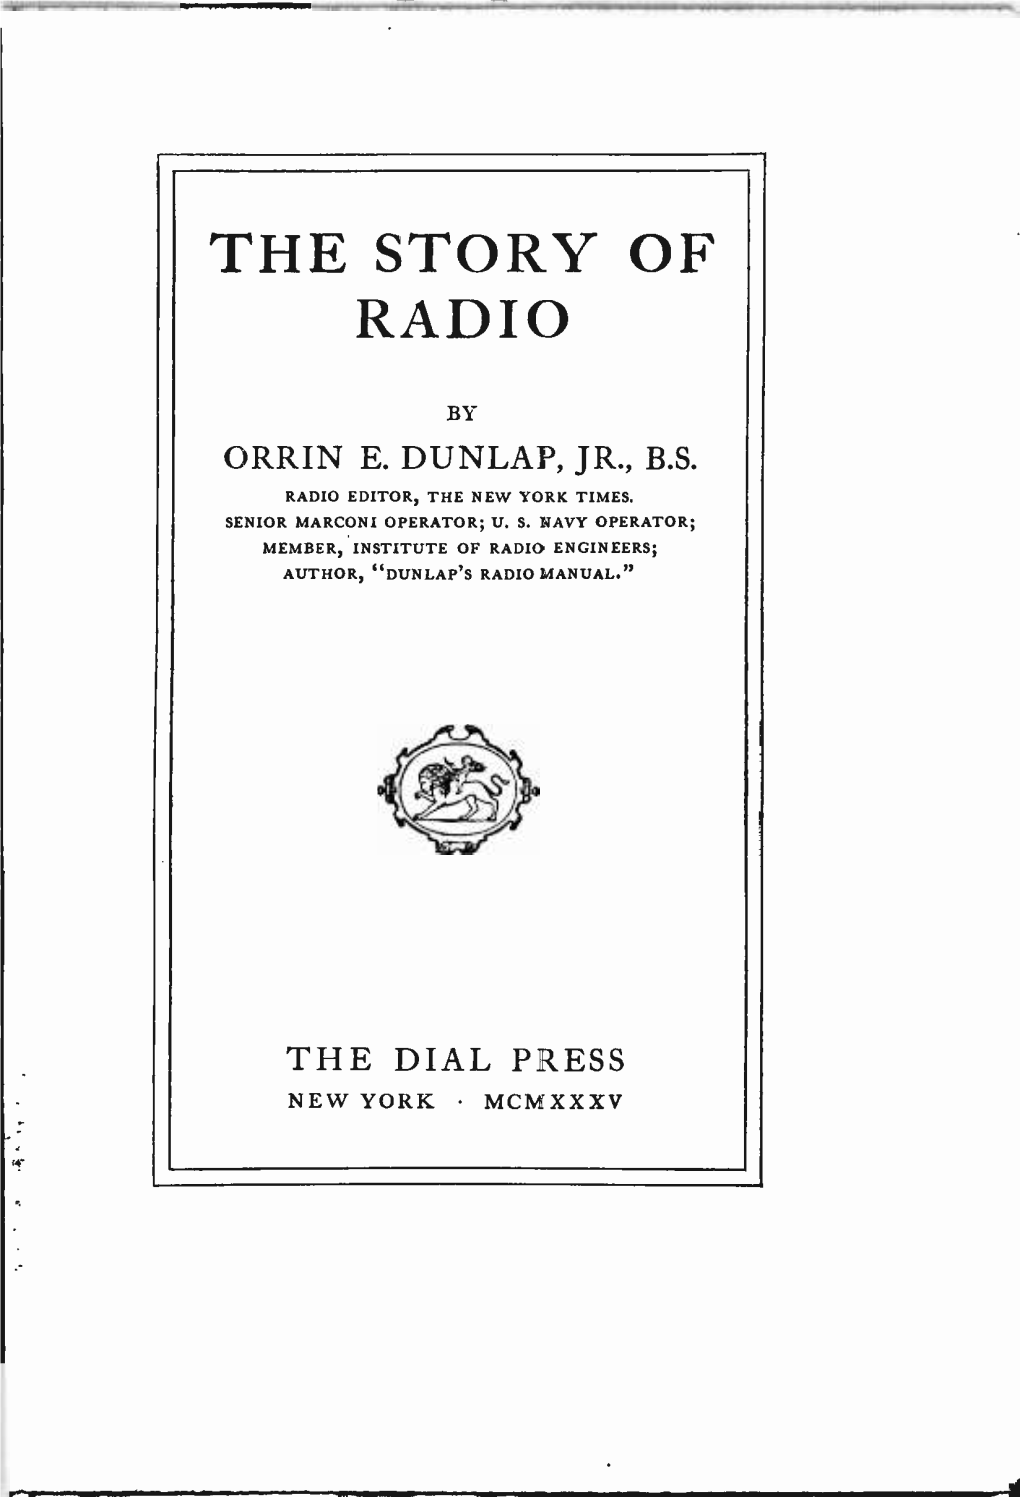 The Story of Radio